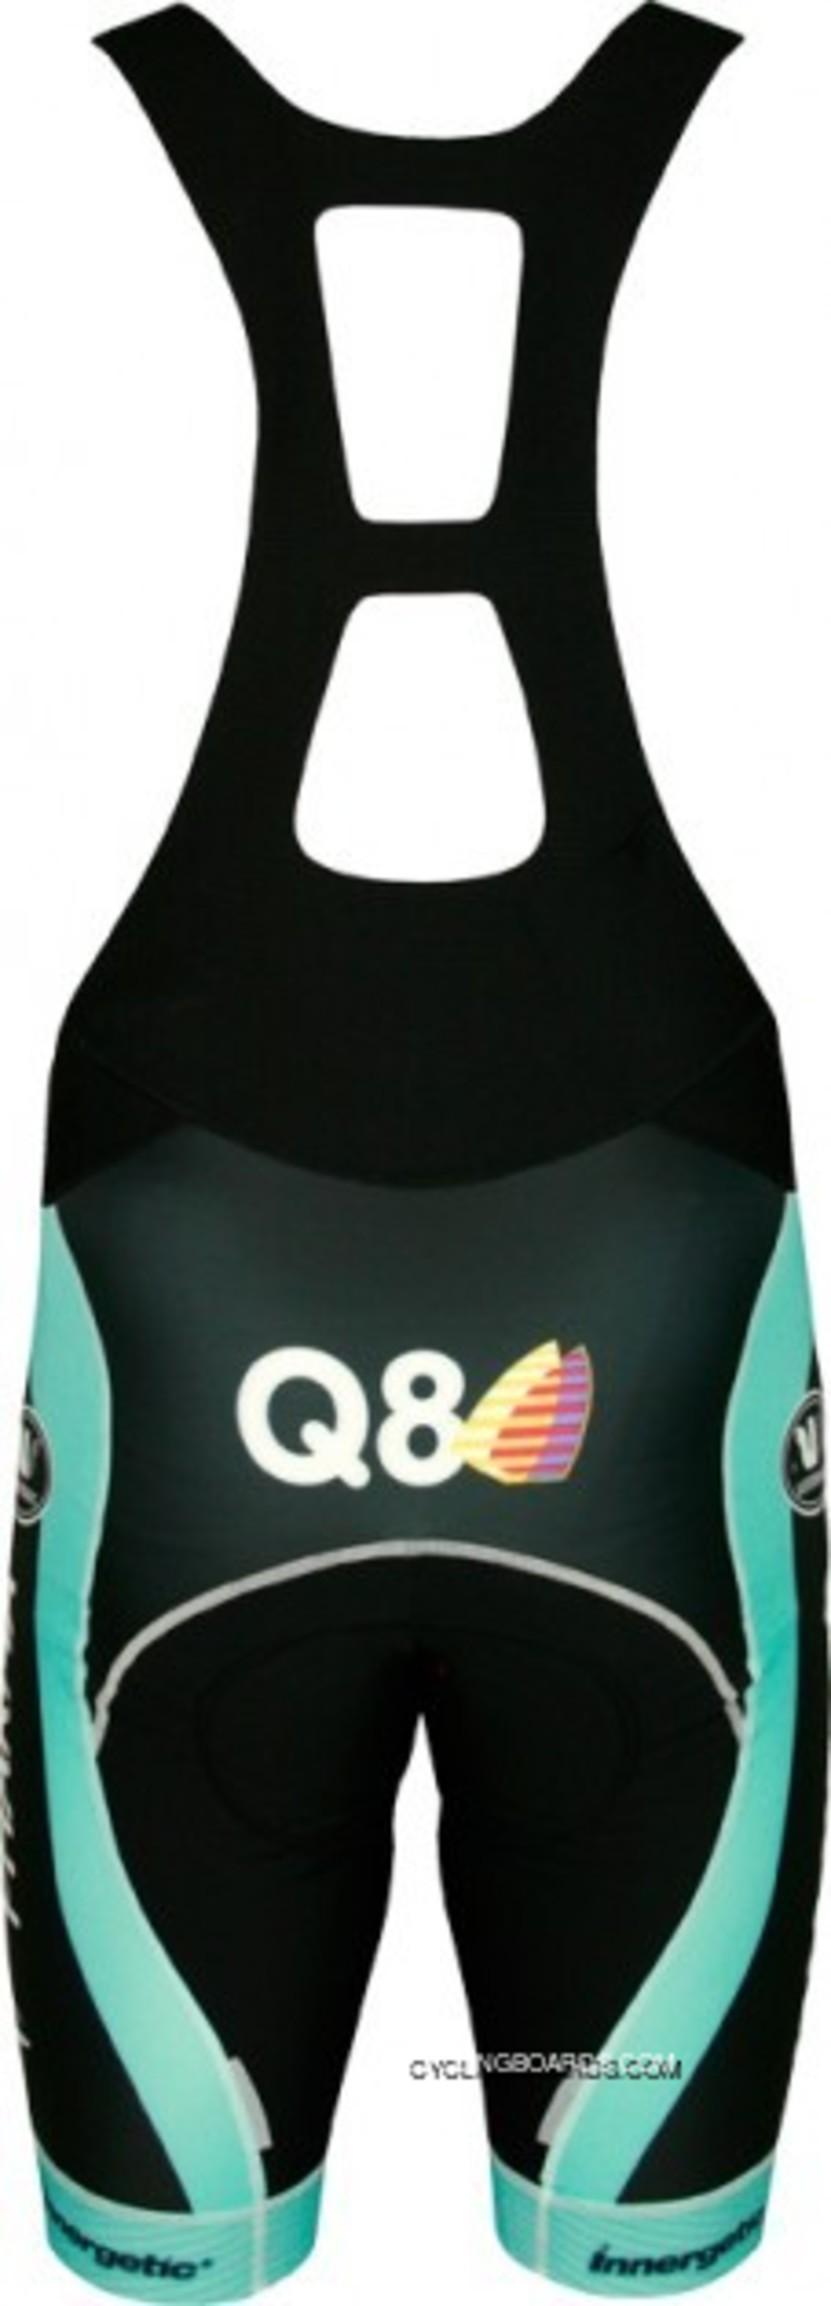 Super Deals Omega Pharma-Quickstep 2012 Vermarc Professional Cycling Team - Cycling Racing Bib Shorts Frc